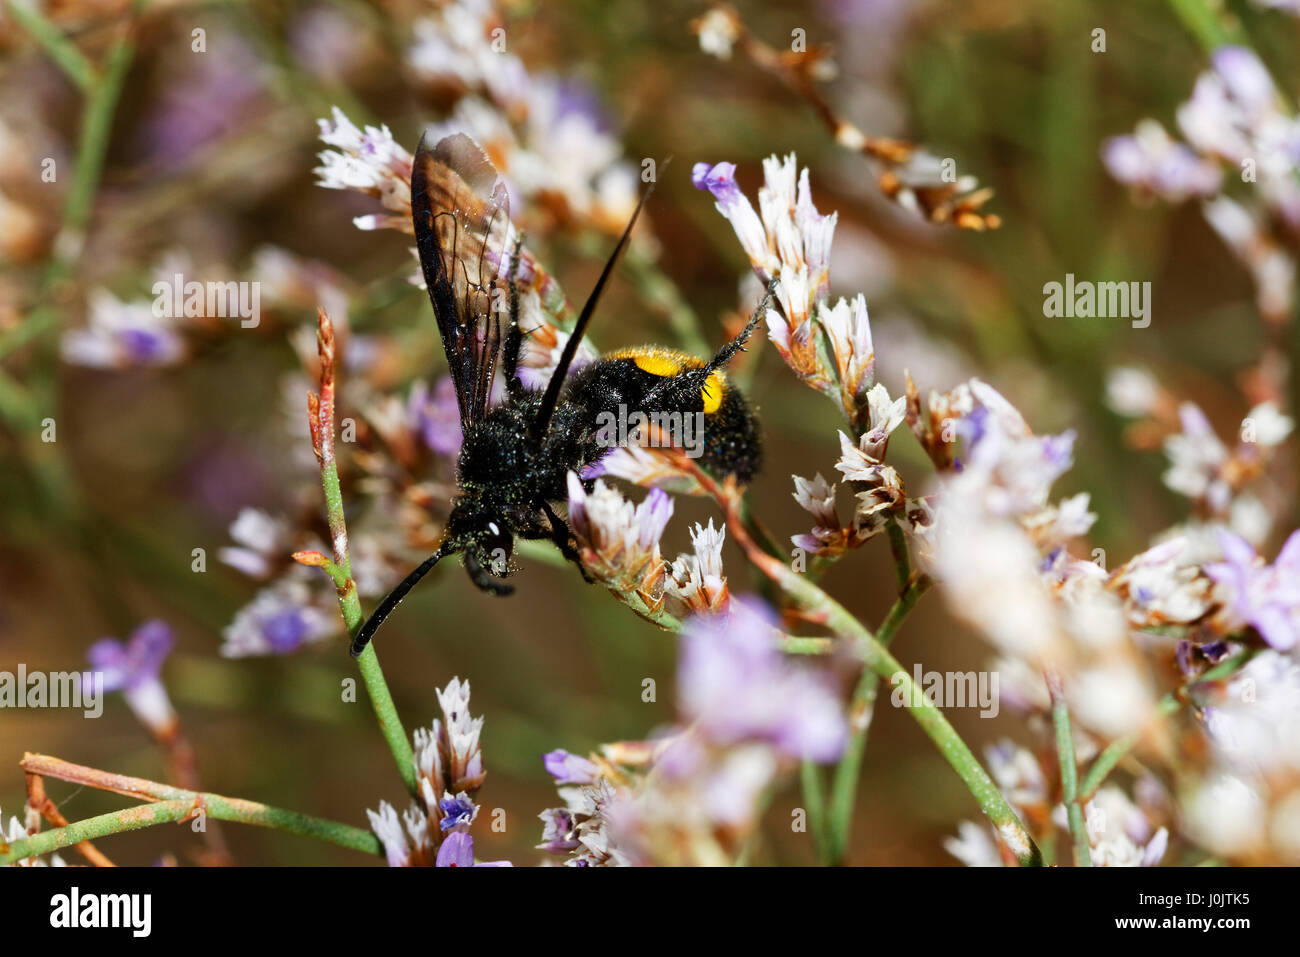 A wasp on the Limonium cancelatum flower, Telascica Nature Park, Croatia Stock Photo